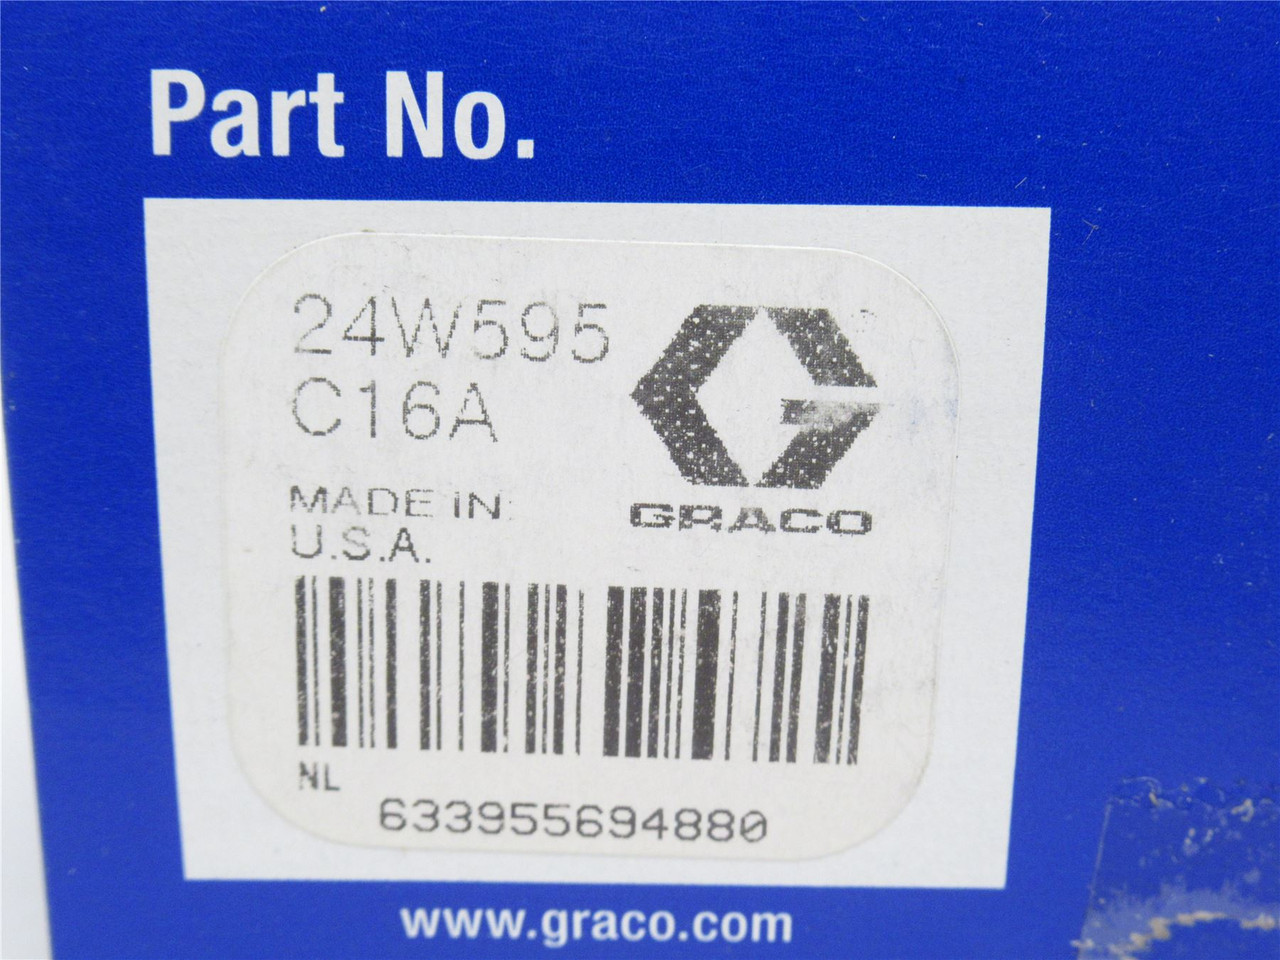 Graco 24W595; Pump Inlet Filter Rebuild Kit C16A